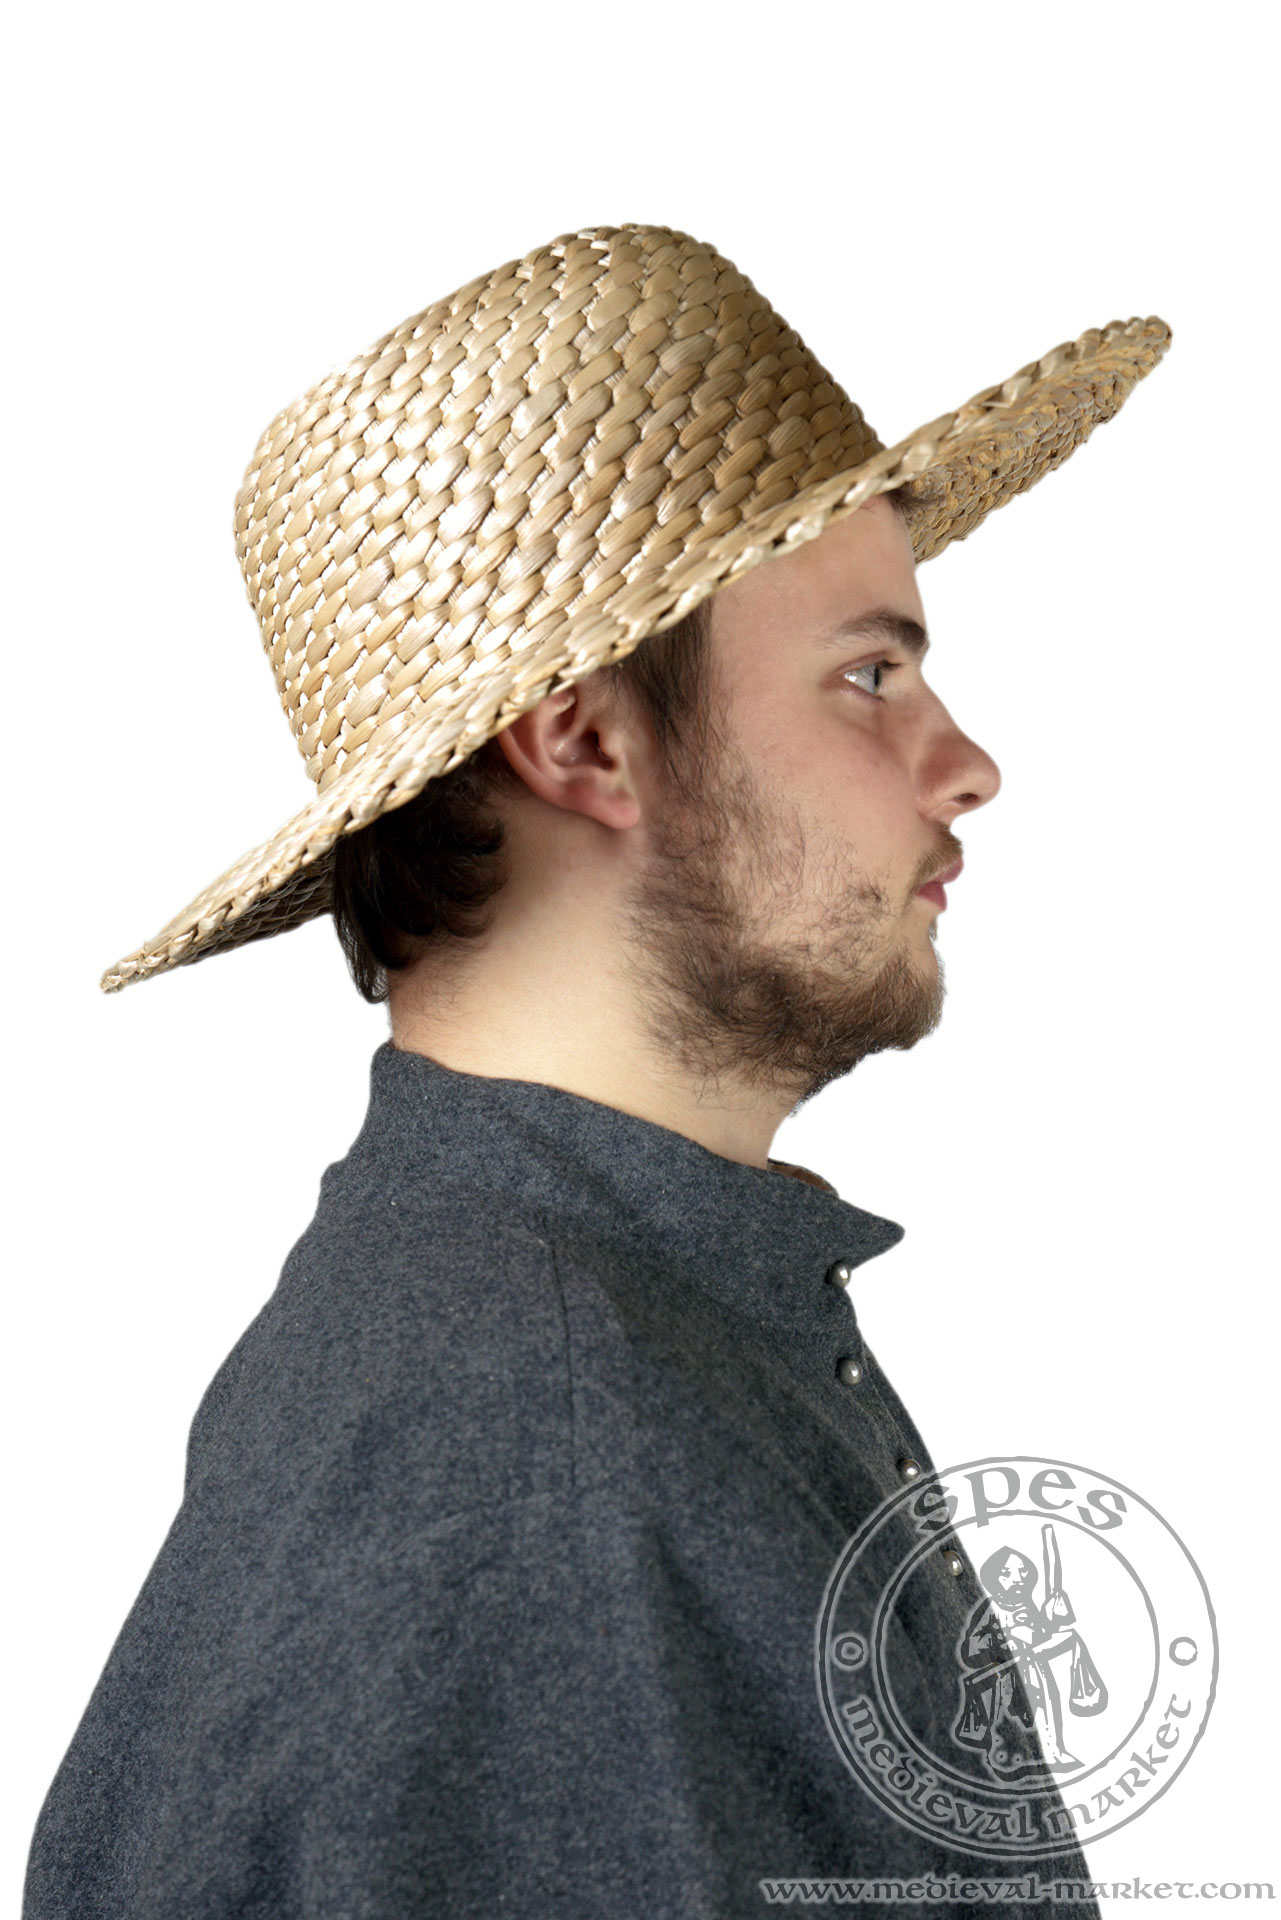 Straw hat type 1 . MEDIEVAL MARKET - SPES.